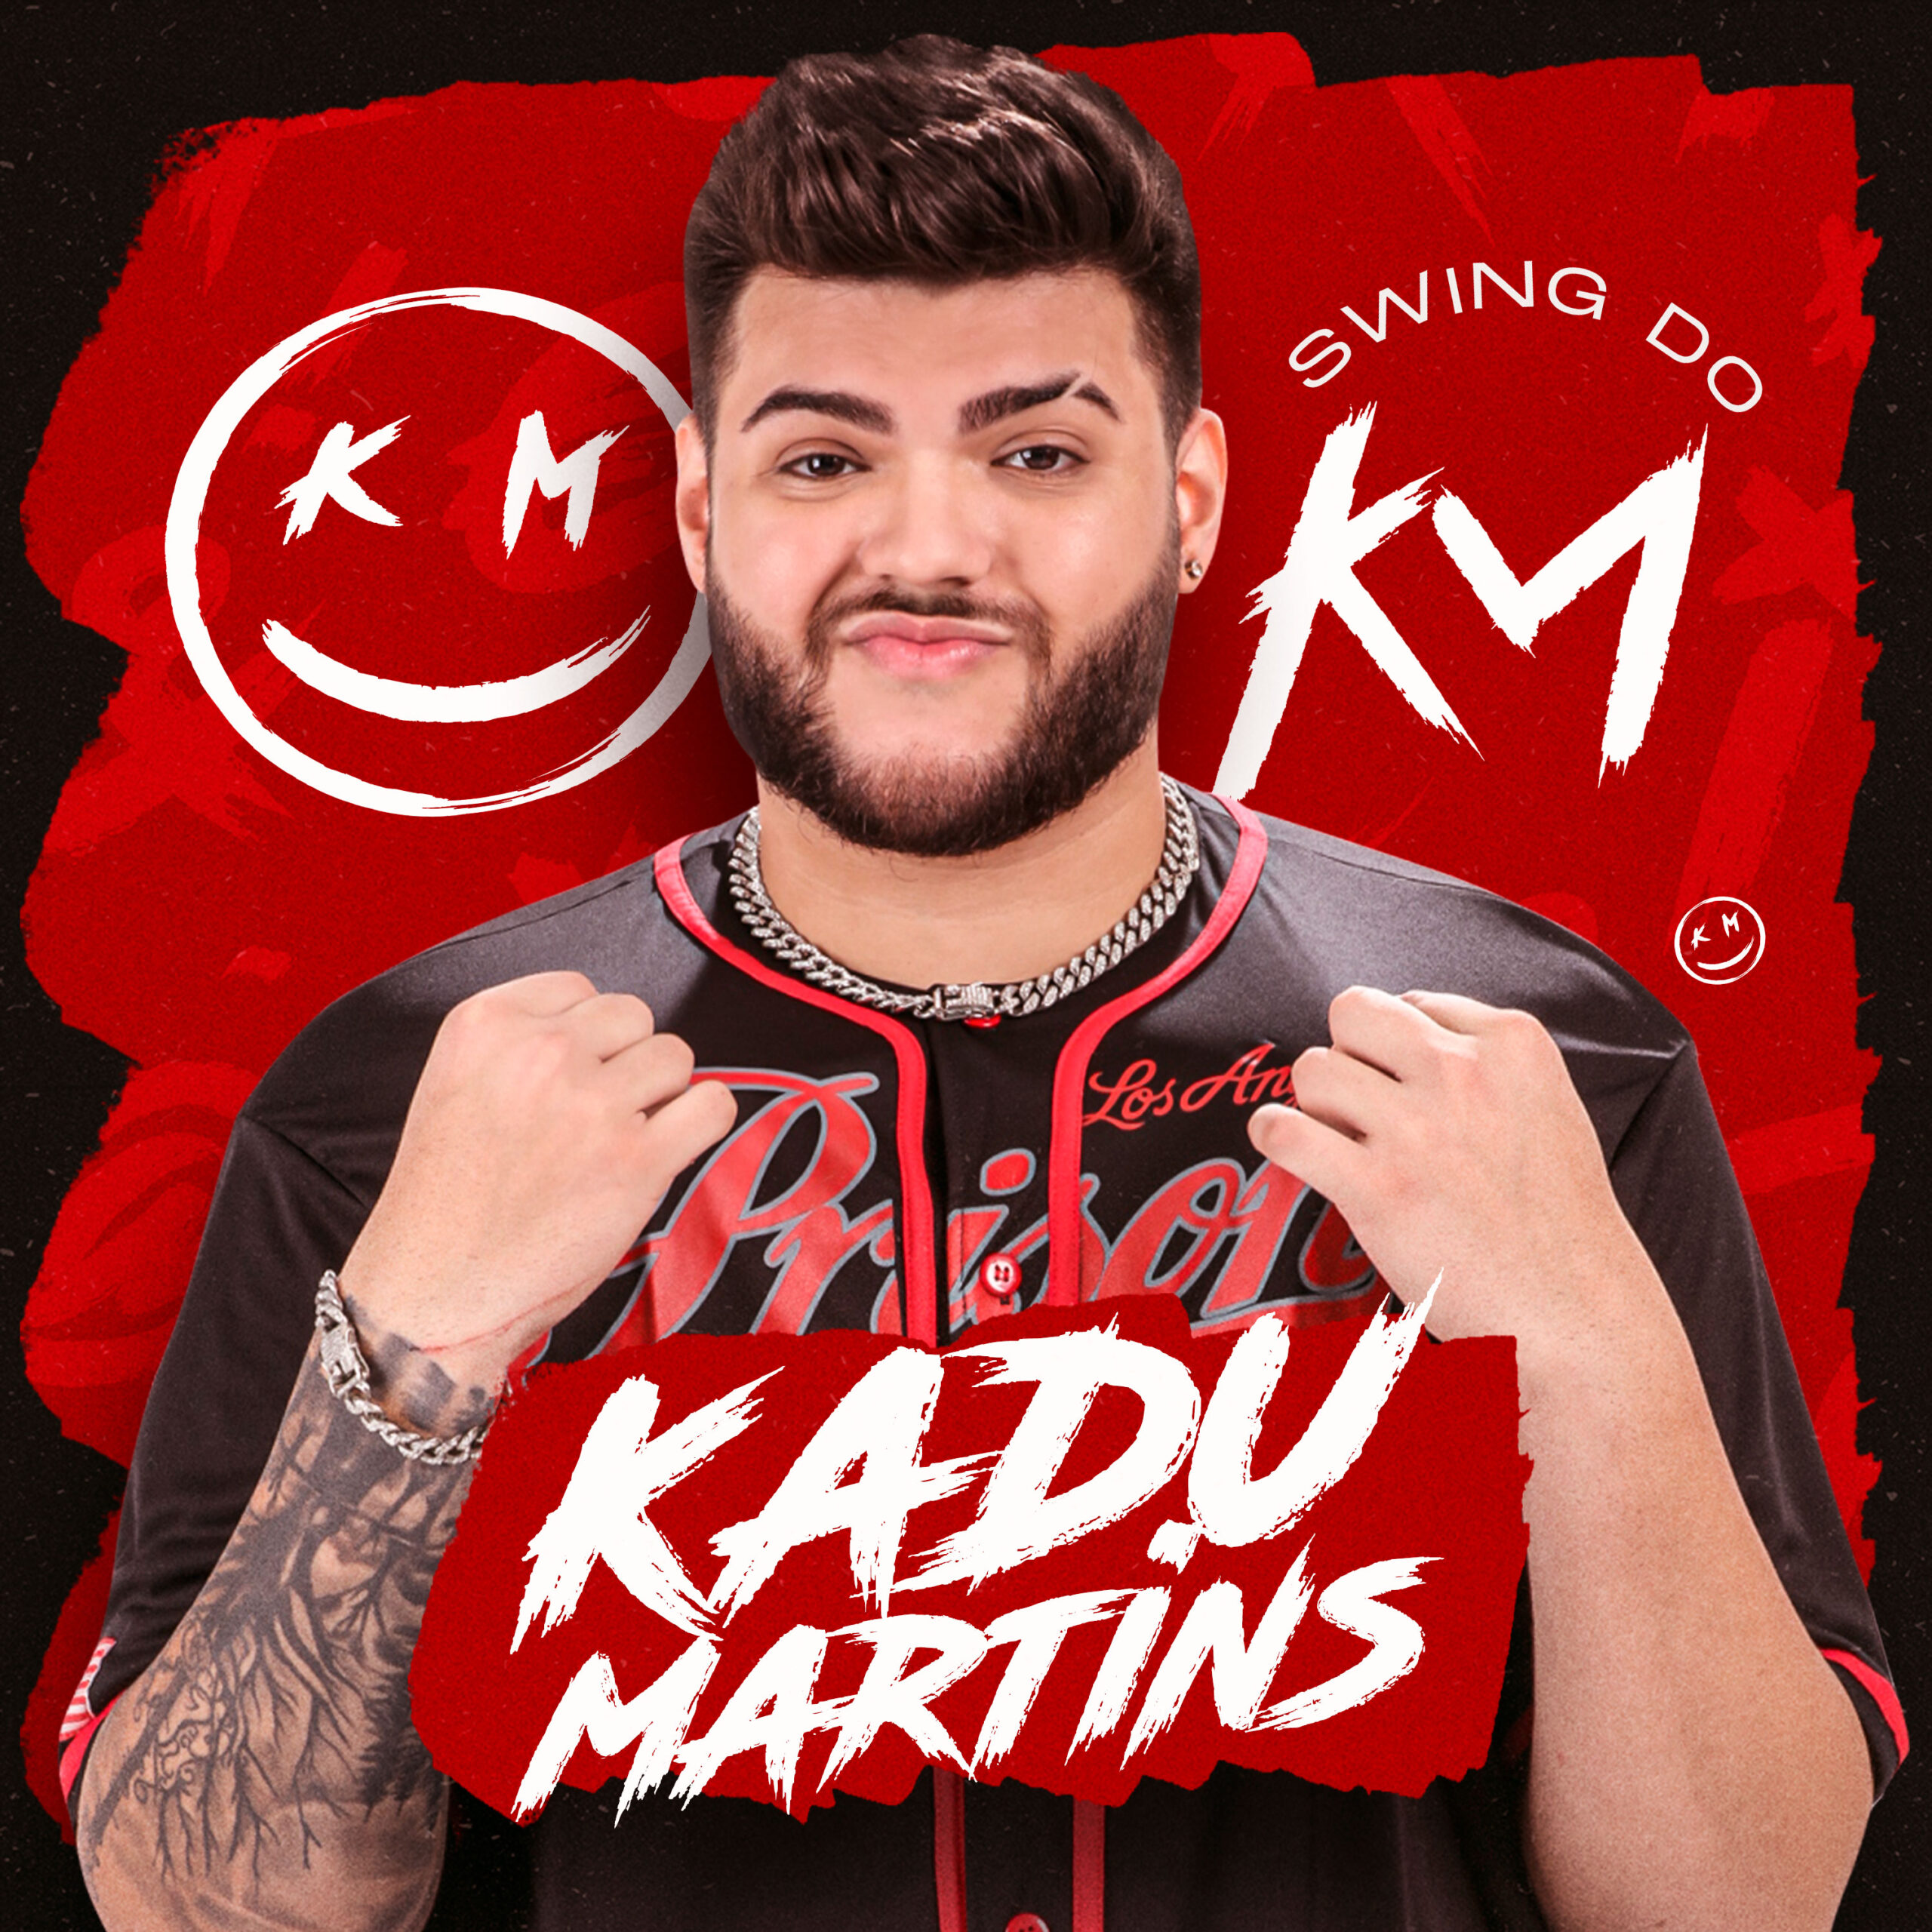 Kadu Martins lança o EP “Swing do KM”